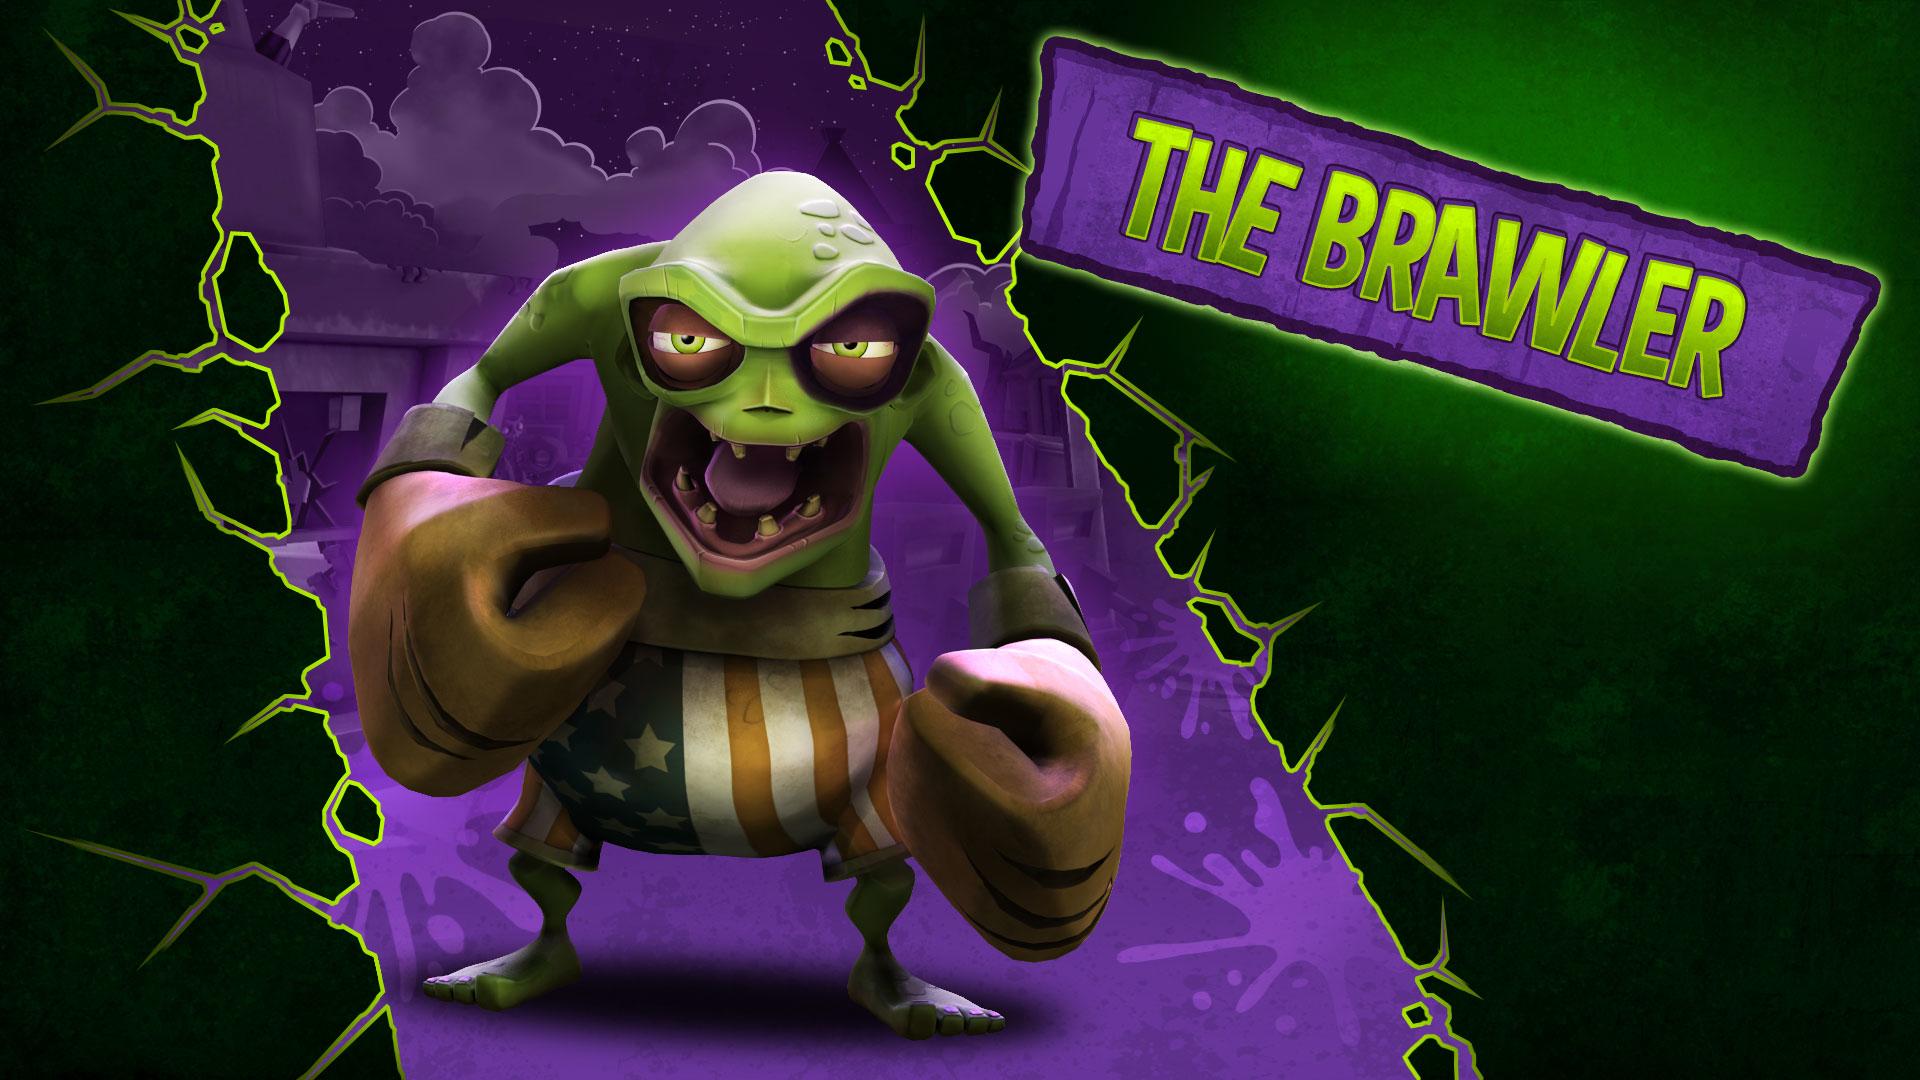 Zombie Tycoon 2 Brainhov s Revenge at 2048 x 2048 iPad size wallpapers HD quality